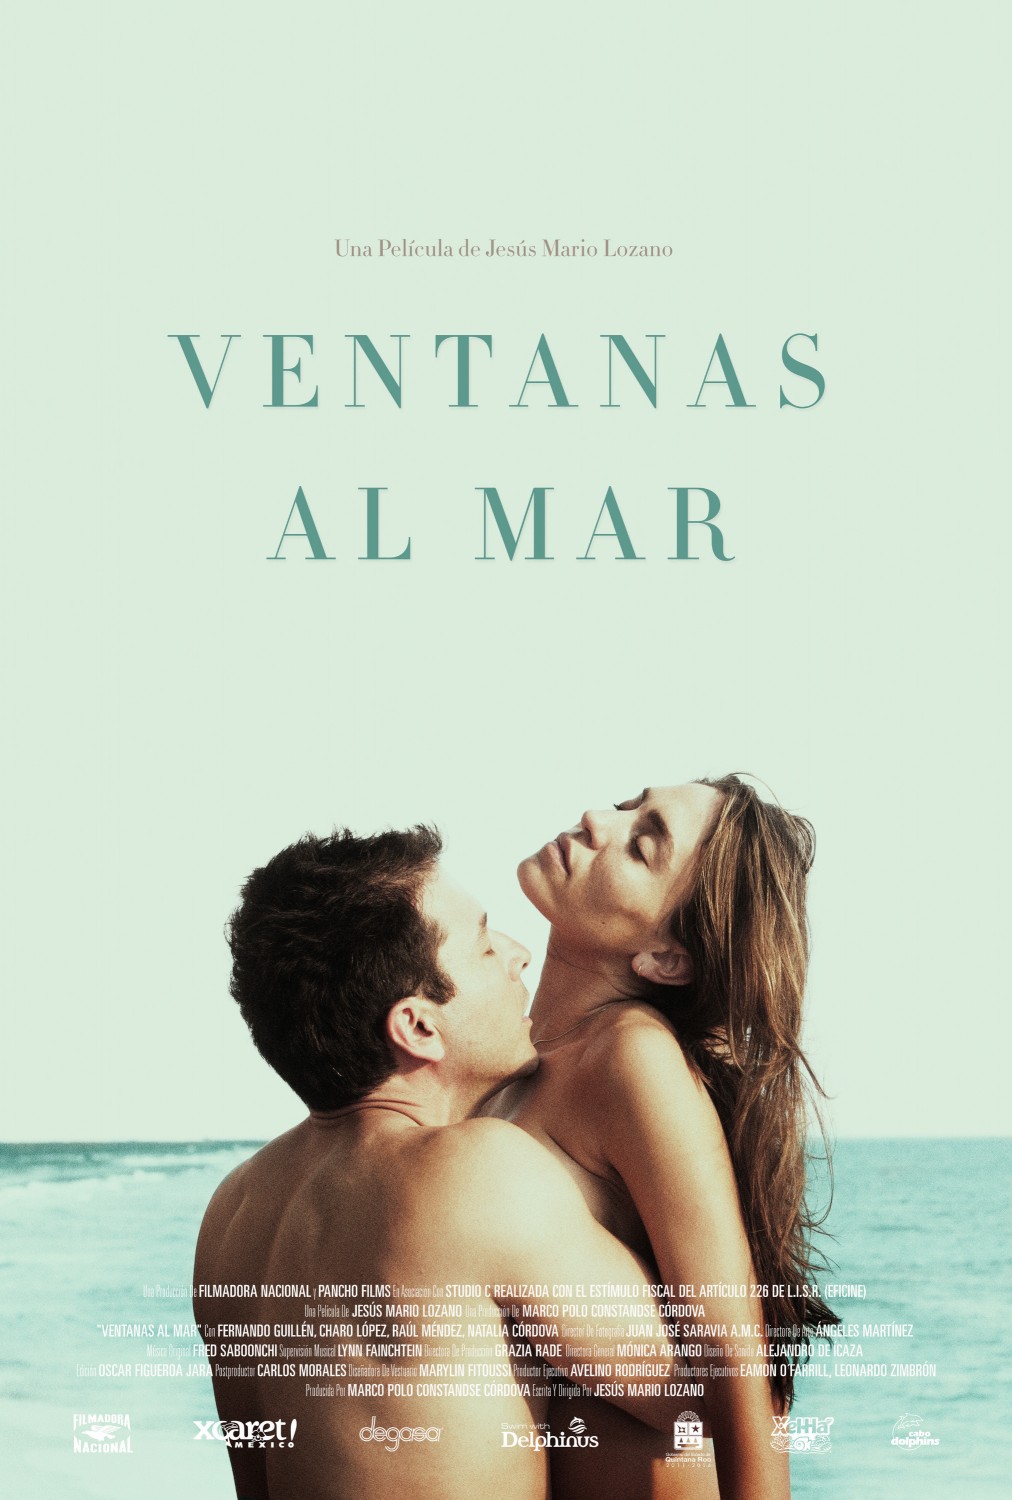 Extra Large Movie Poster Image for Ventanas al mar 